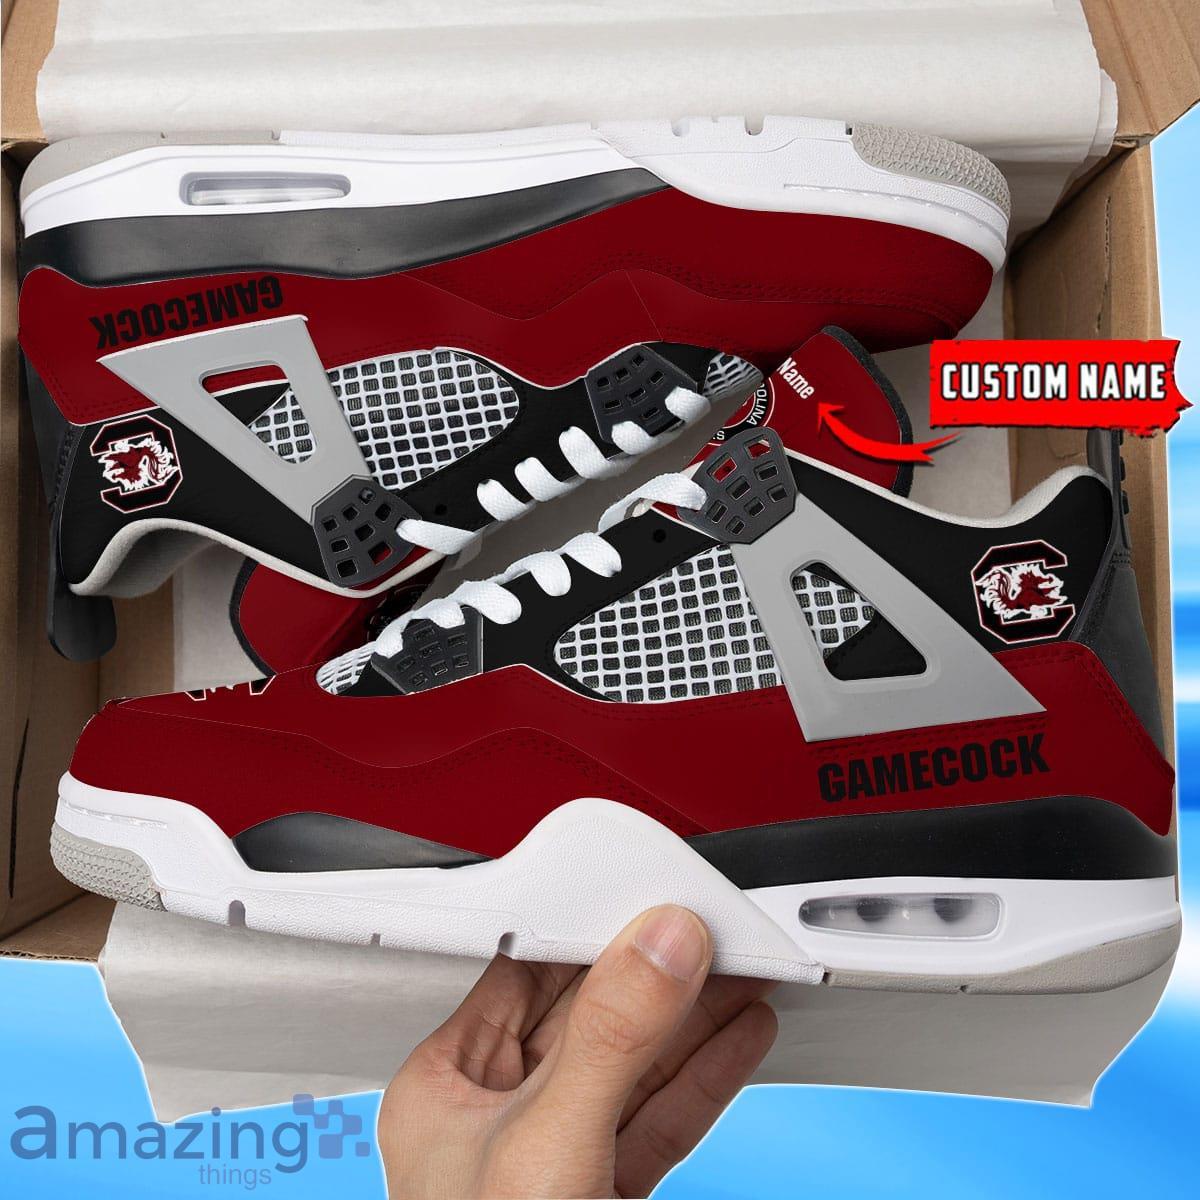 South Carolina Gamecocks Custom Name Air Jordan 4 Shoes Impressive Gift For Men Women Product Photo 1